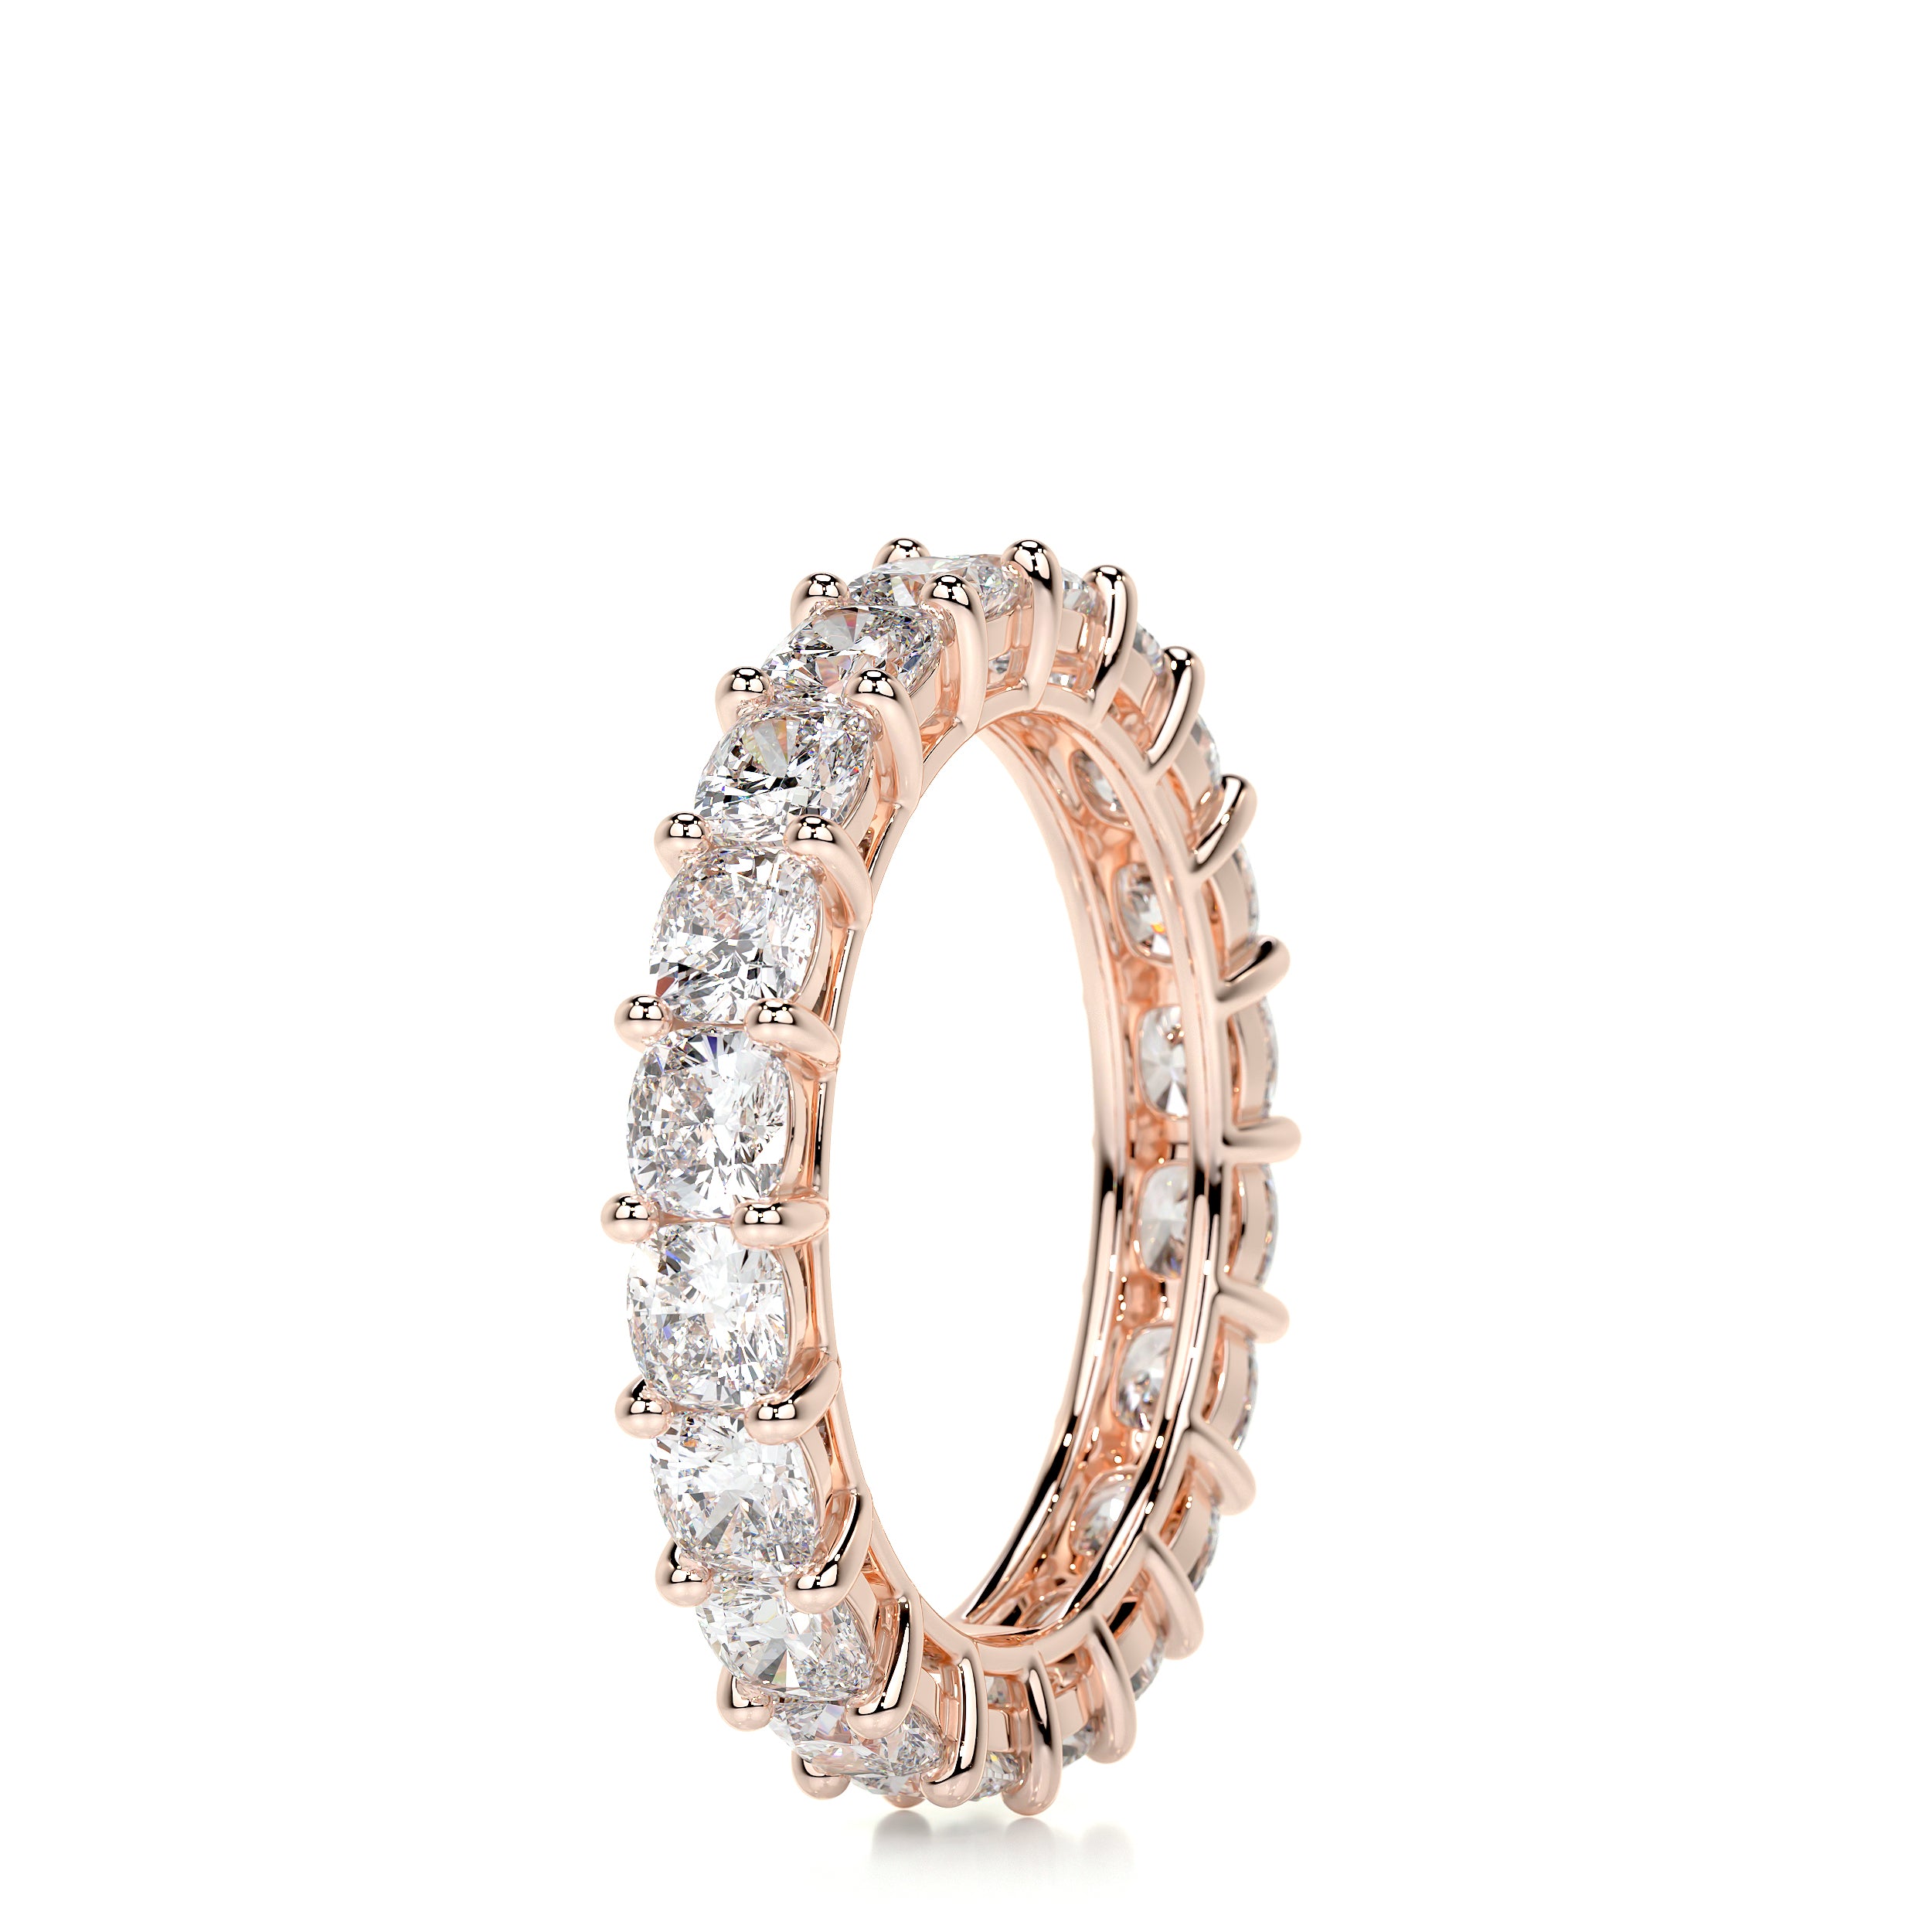 Dianna Diamond Wedding Ring   (3 Carat) -14K Rose Gold